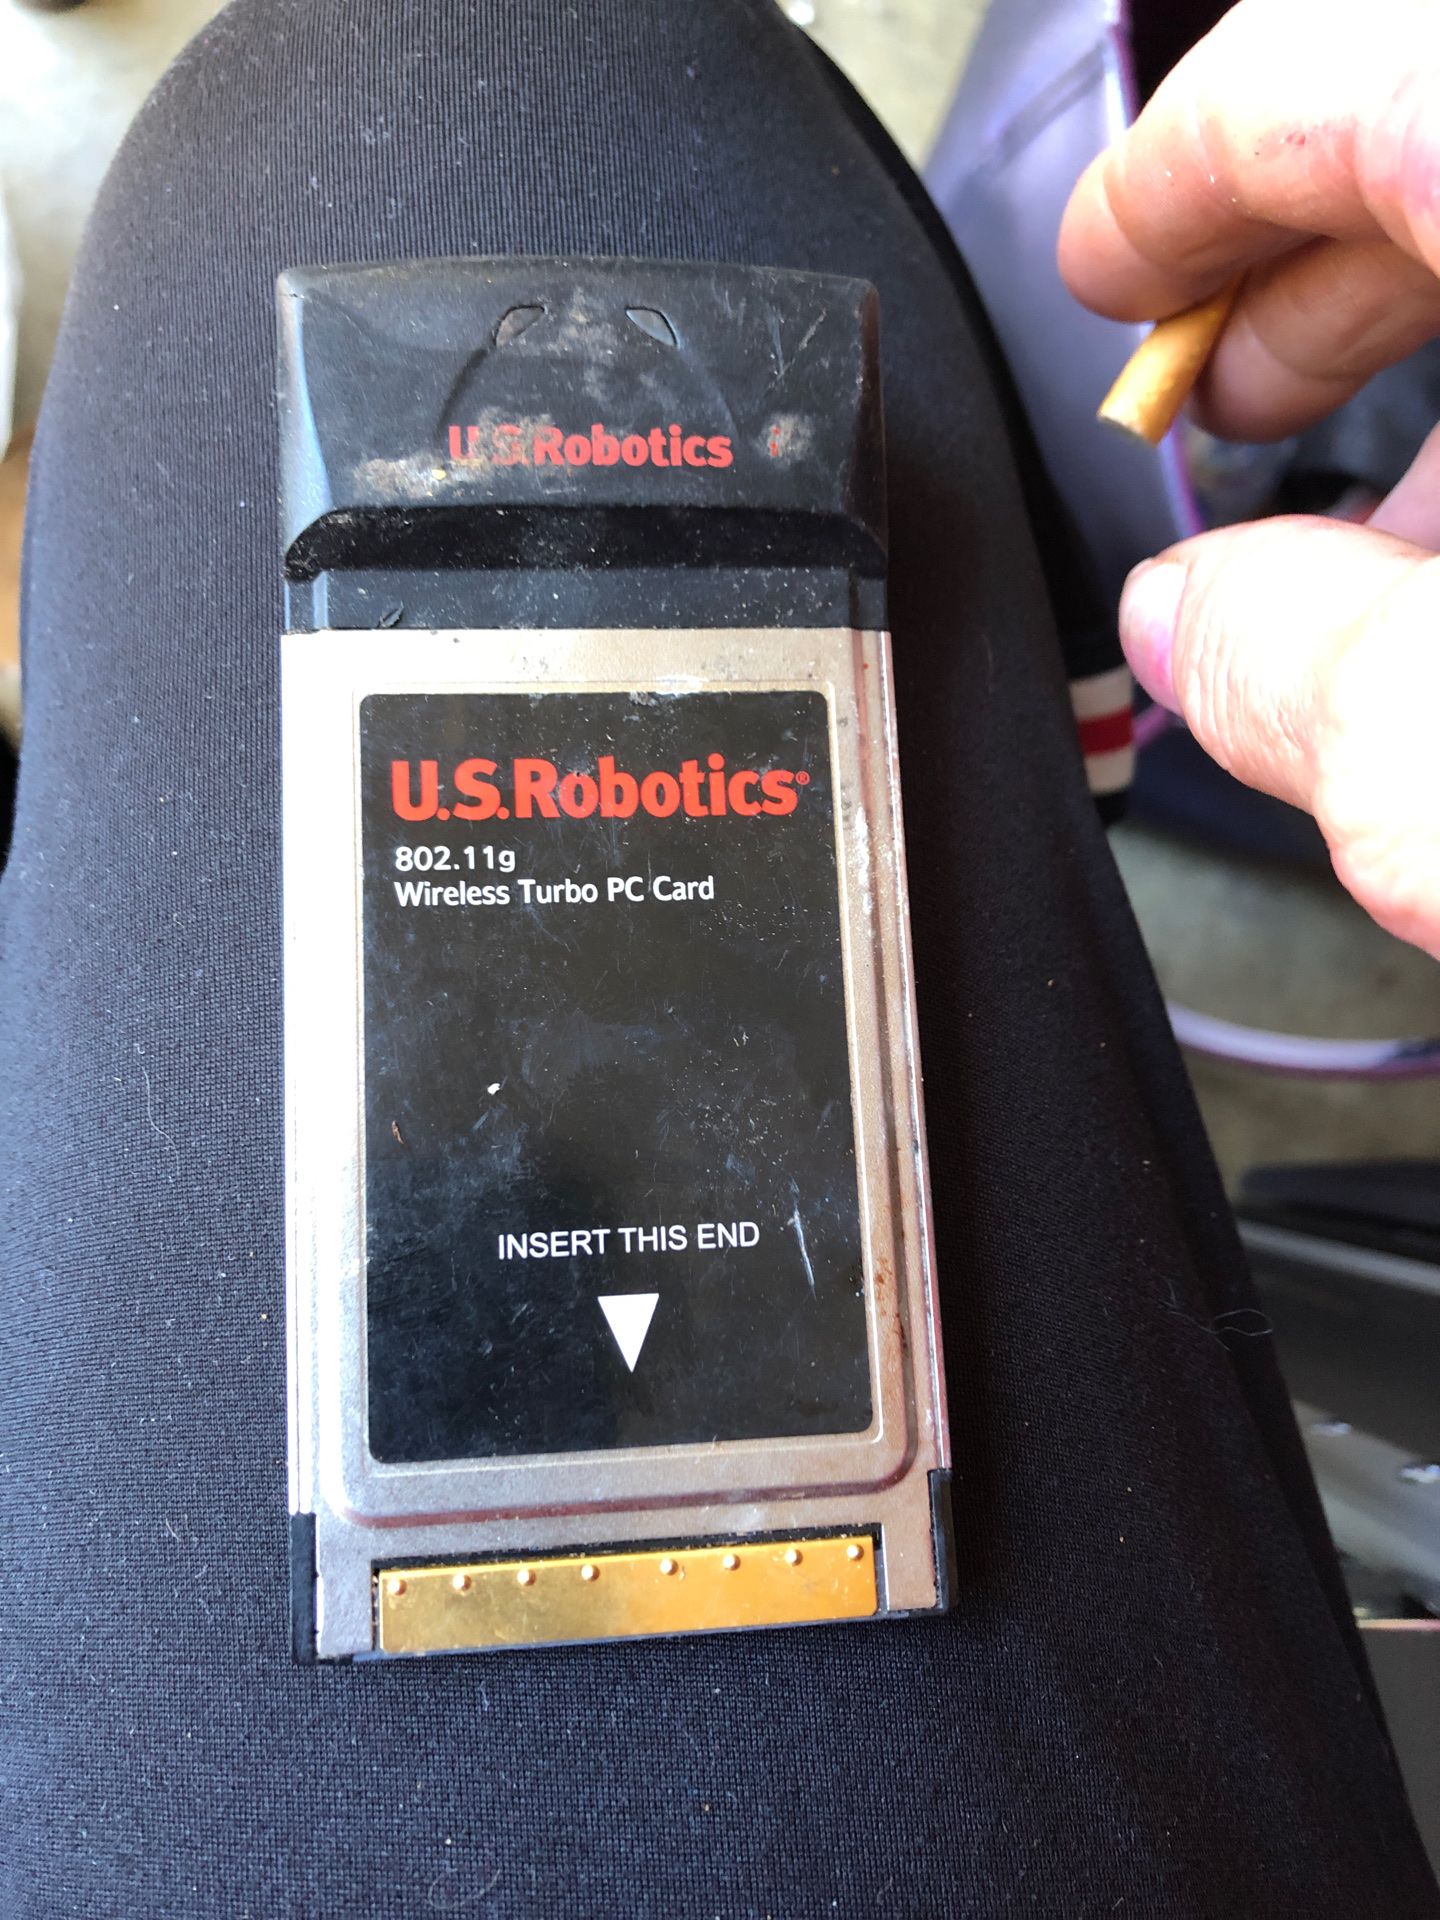 US Robotics wireless turbo pc card